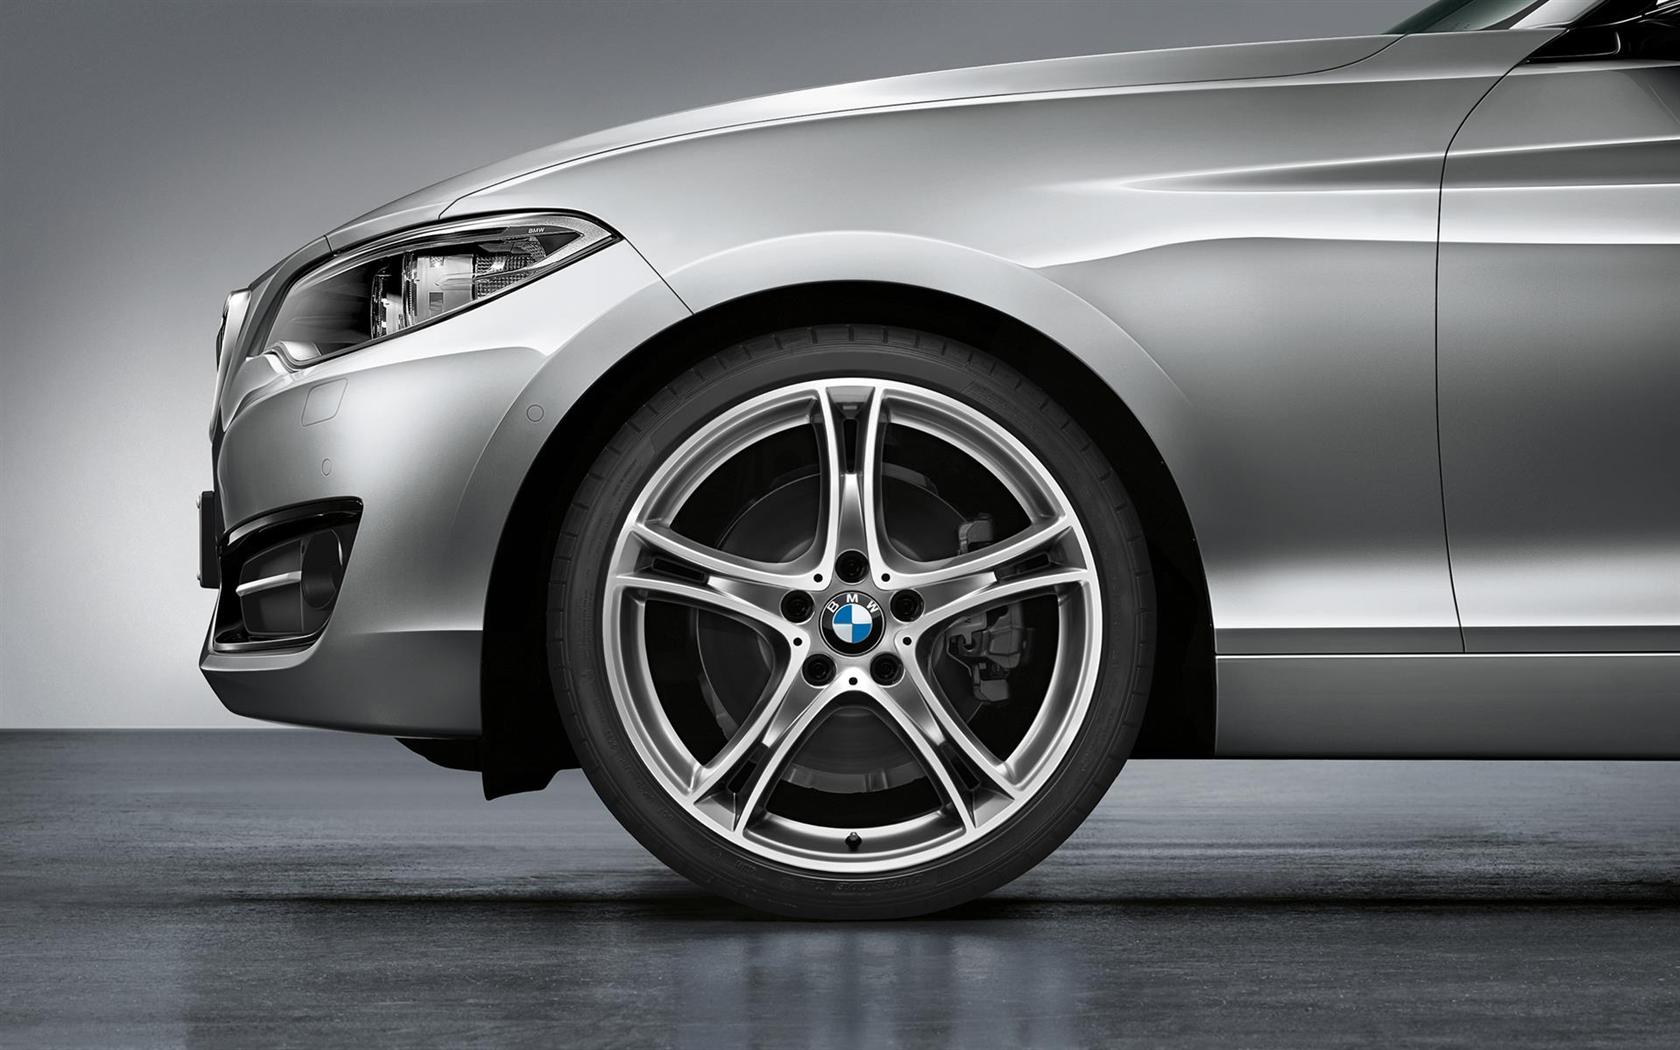 2015 BMW 2 Series Convertible